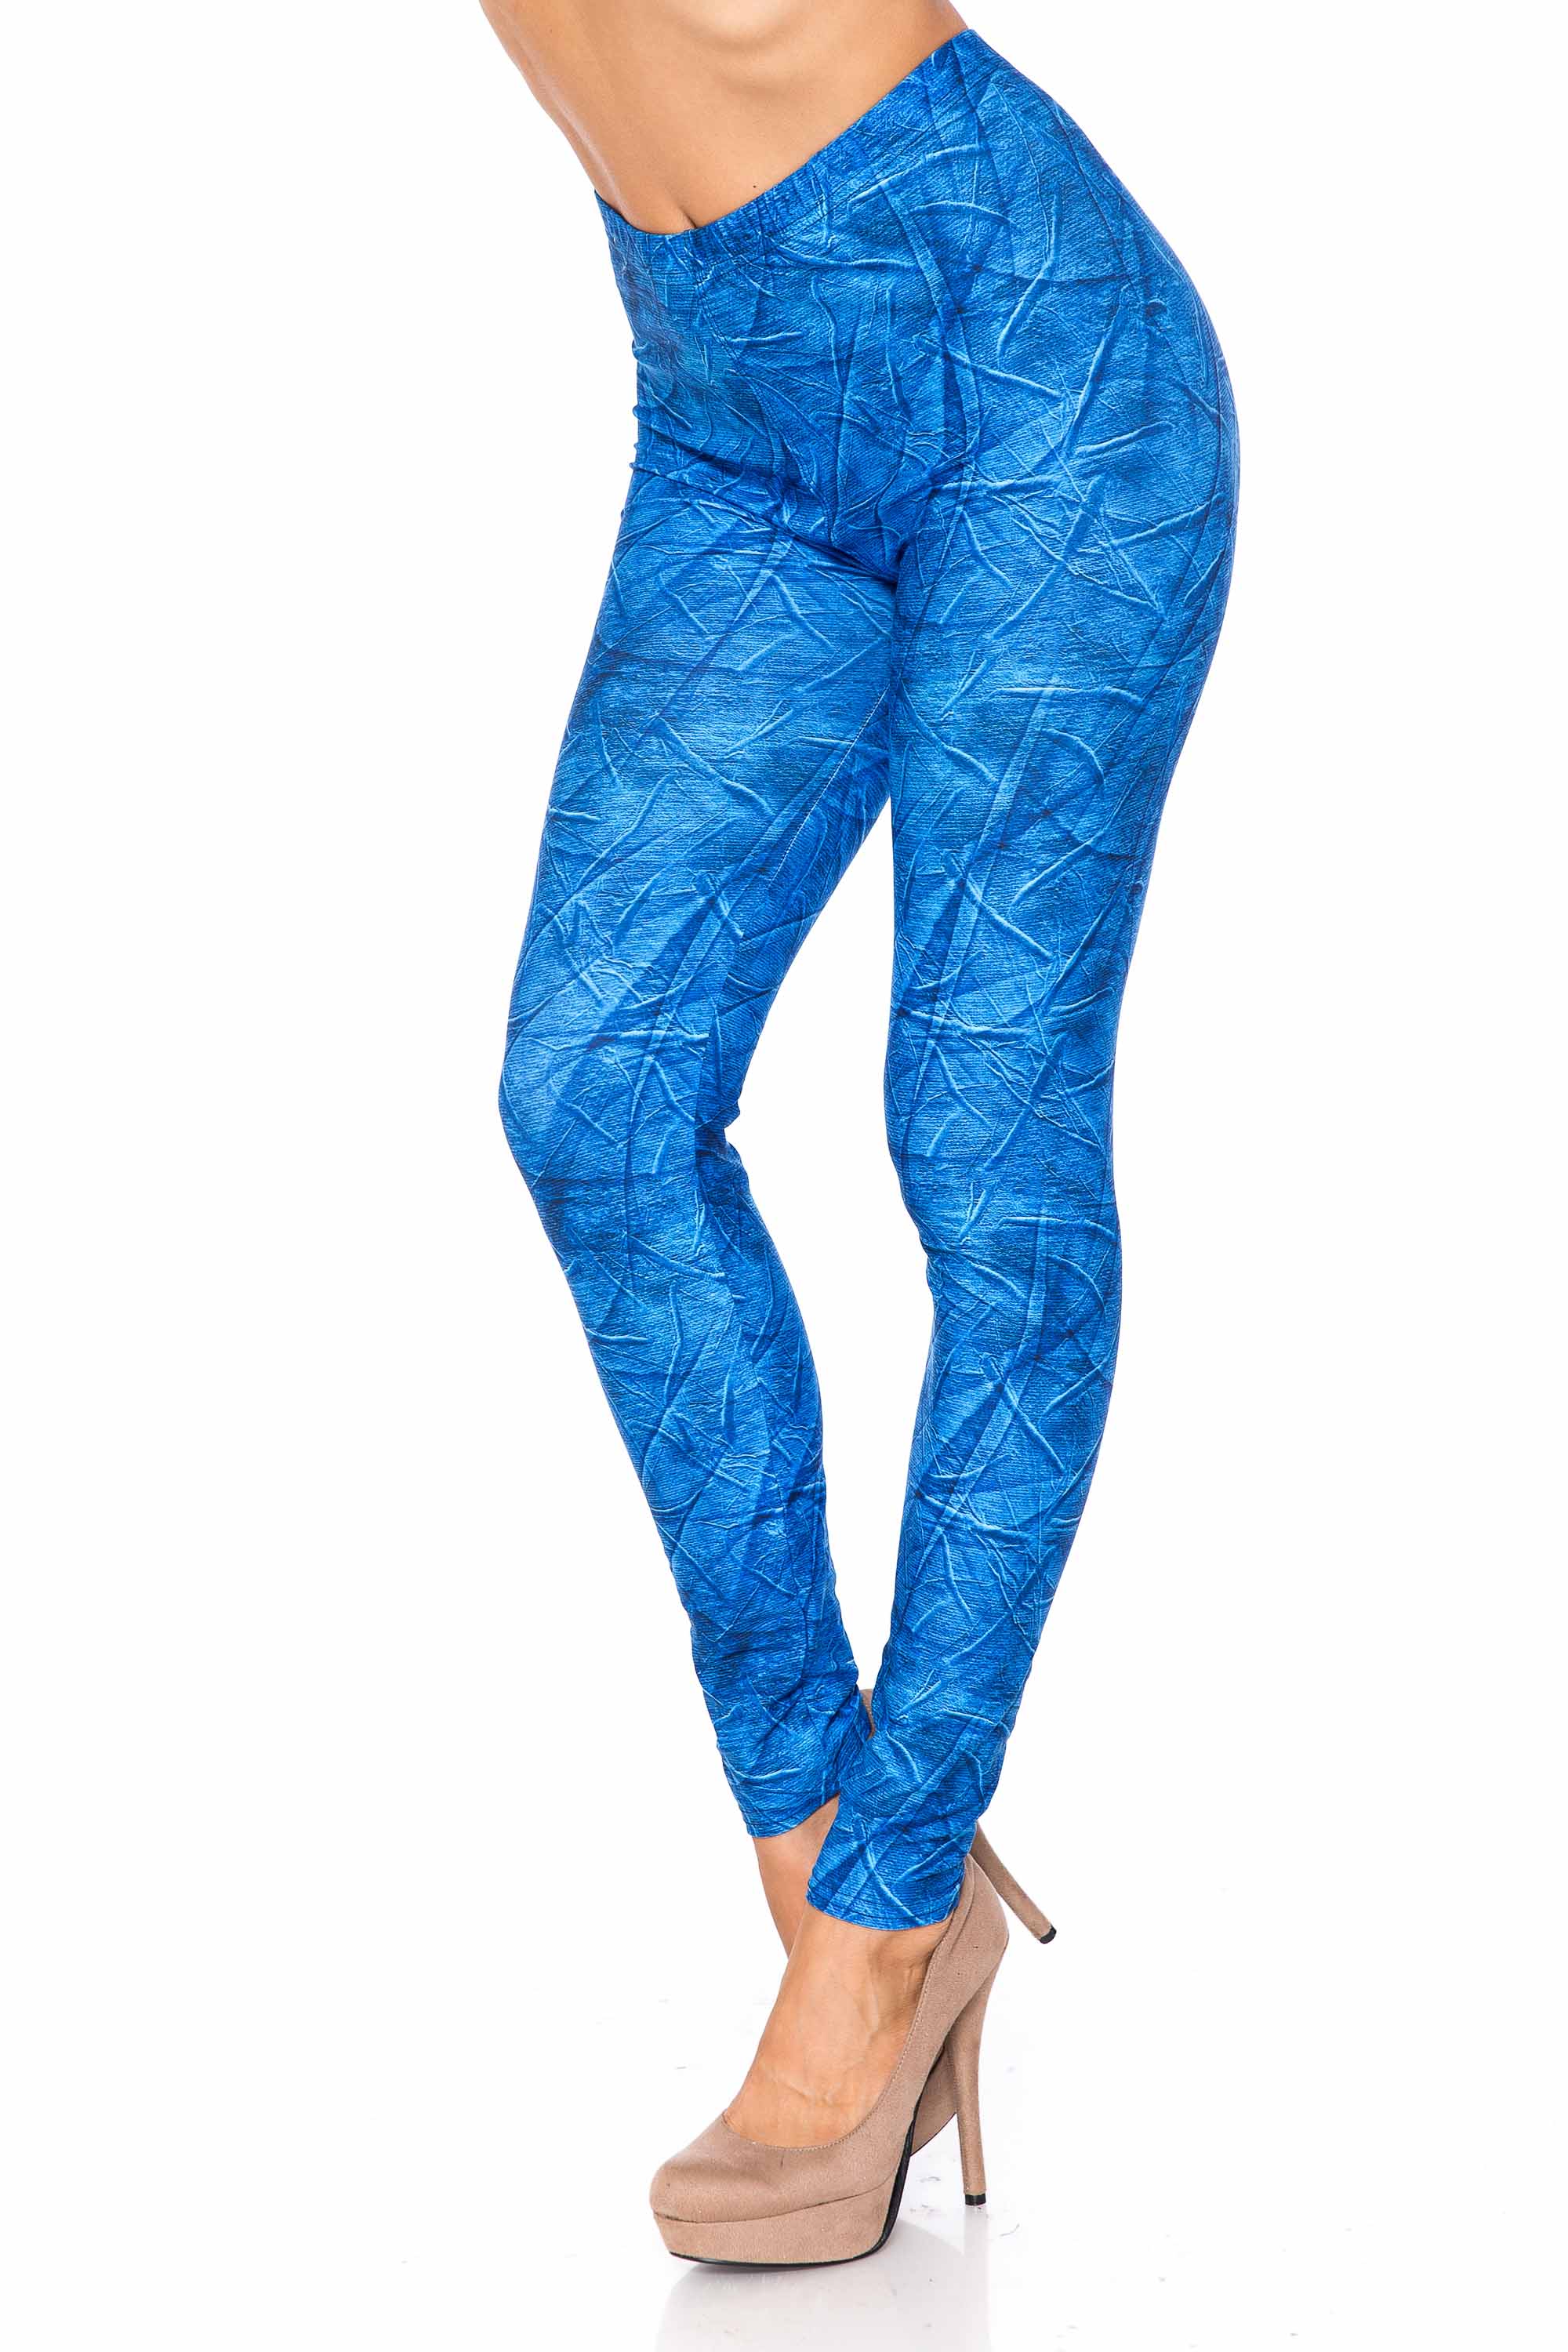 Wholesale Creamy Blue Wrinkled Denim Leggings - USA Fashion™